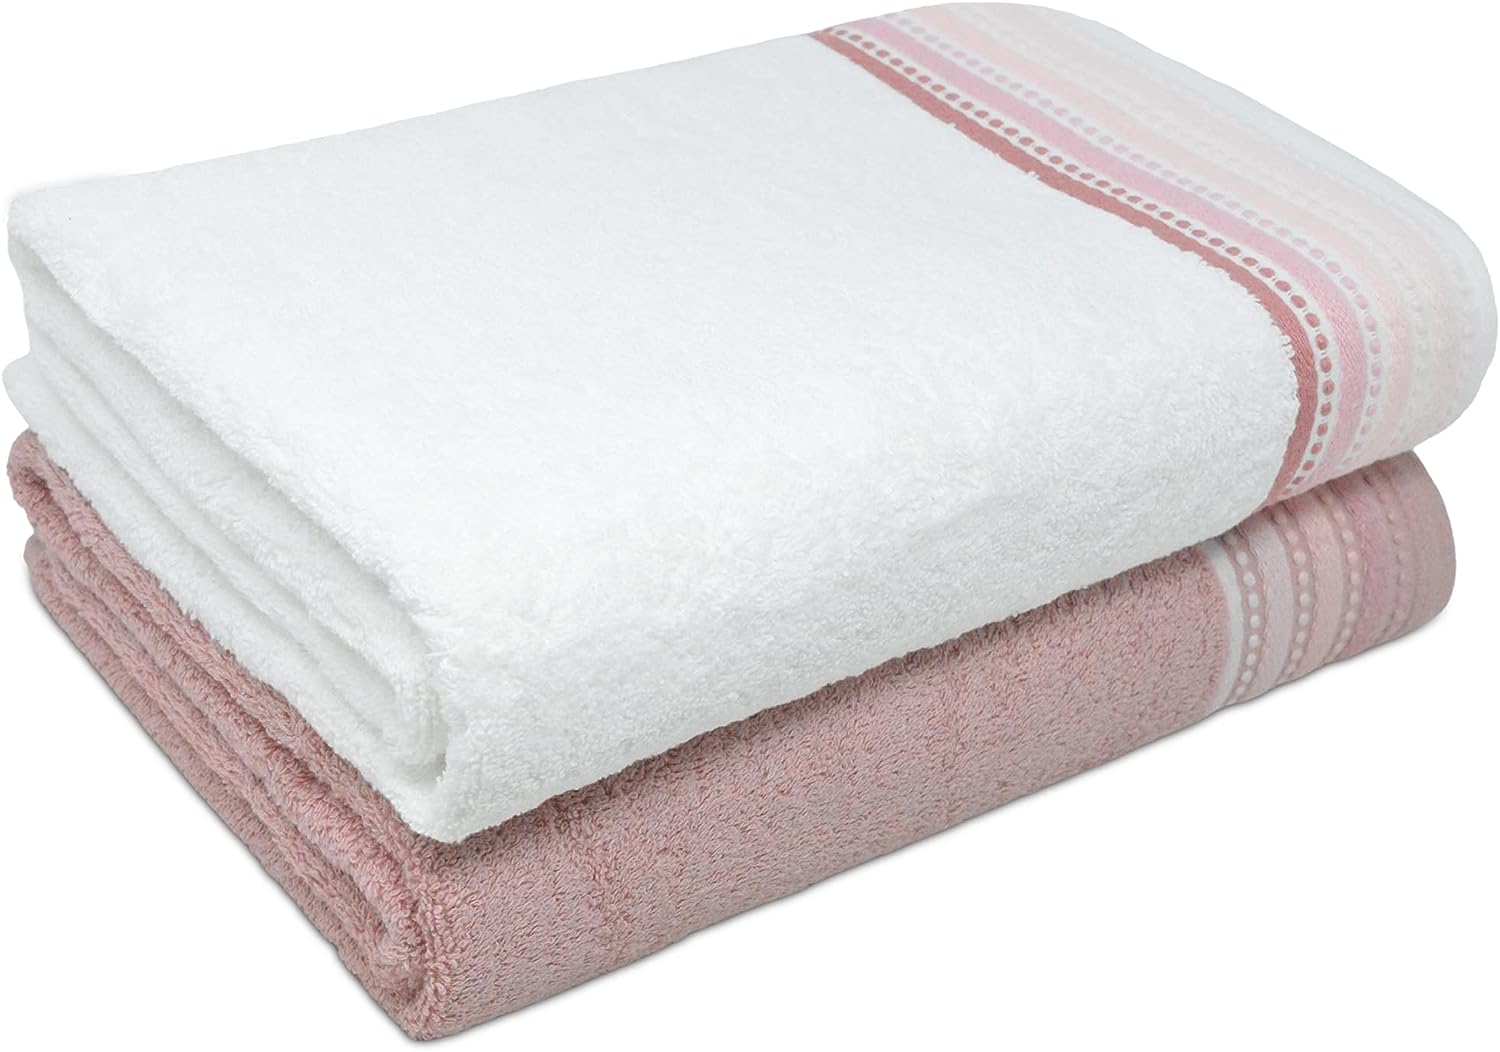 Handy-Bath-Towels-&-Plush-Bath-Sheets